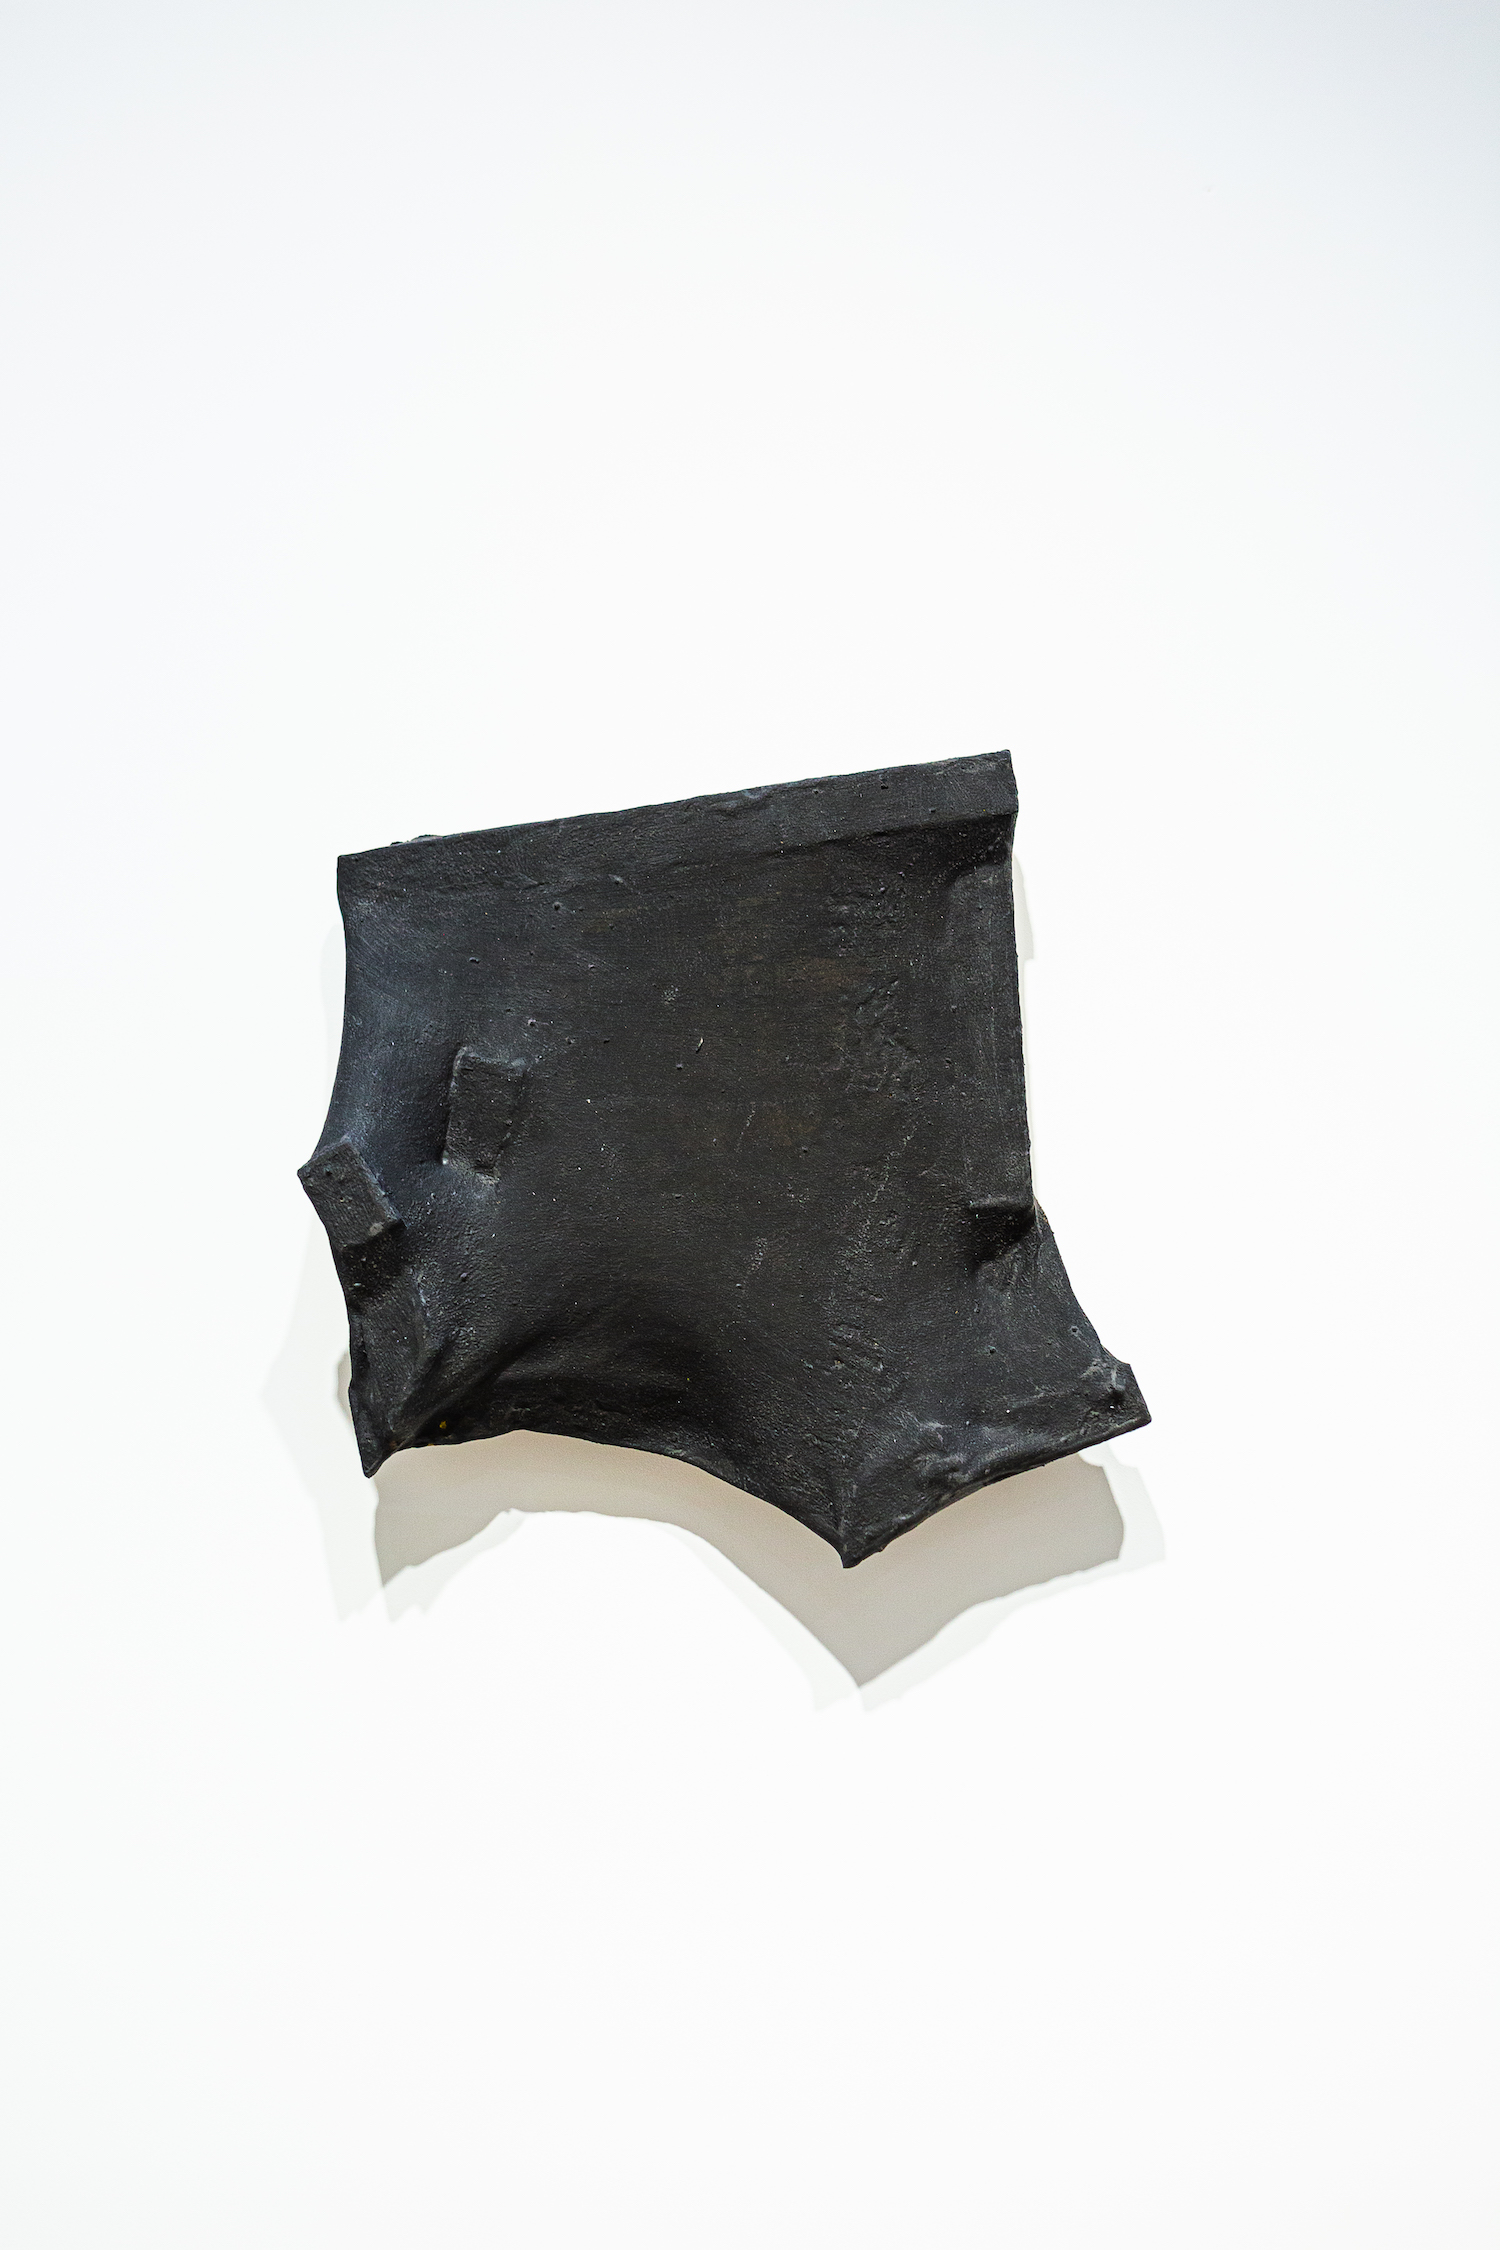 Olga Balema, Untitled, 2020, wood, latex, foam, 45 x 19 x 4".